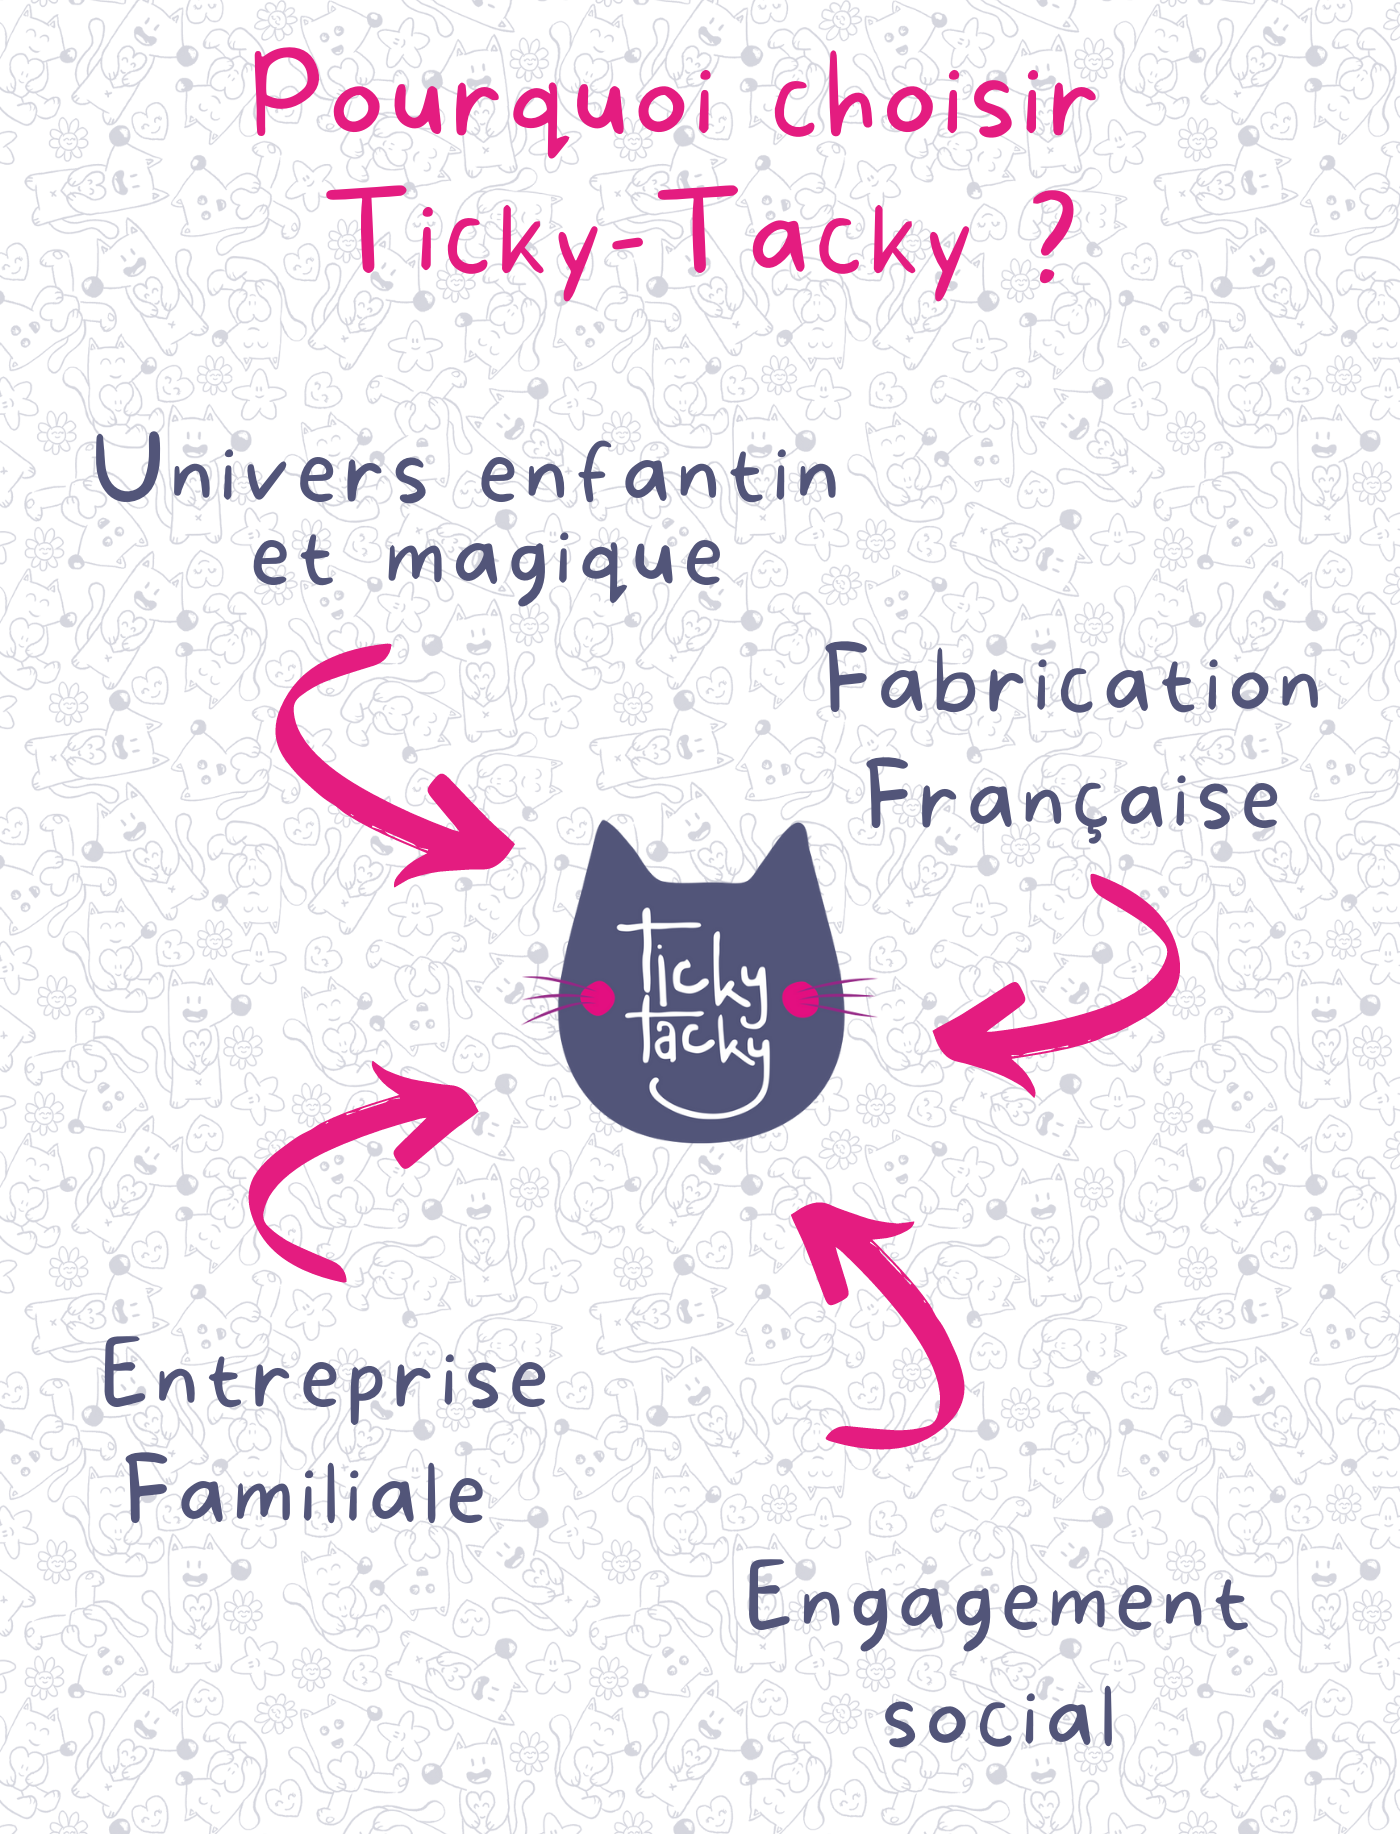 06 - Pourquoi choisir  Ticky-Tacky